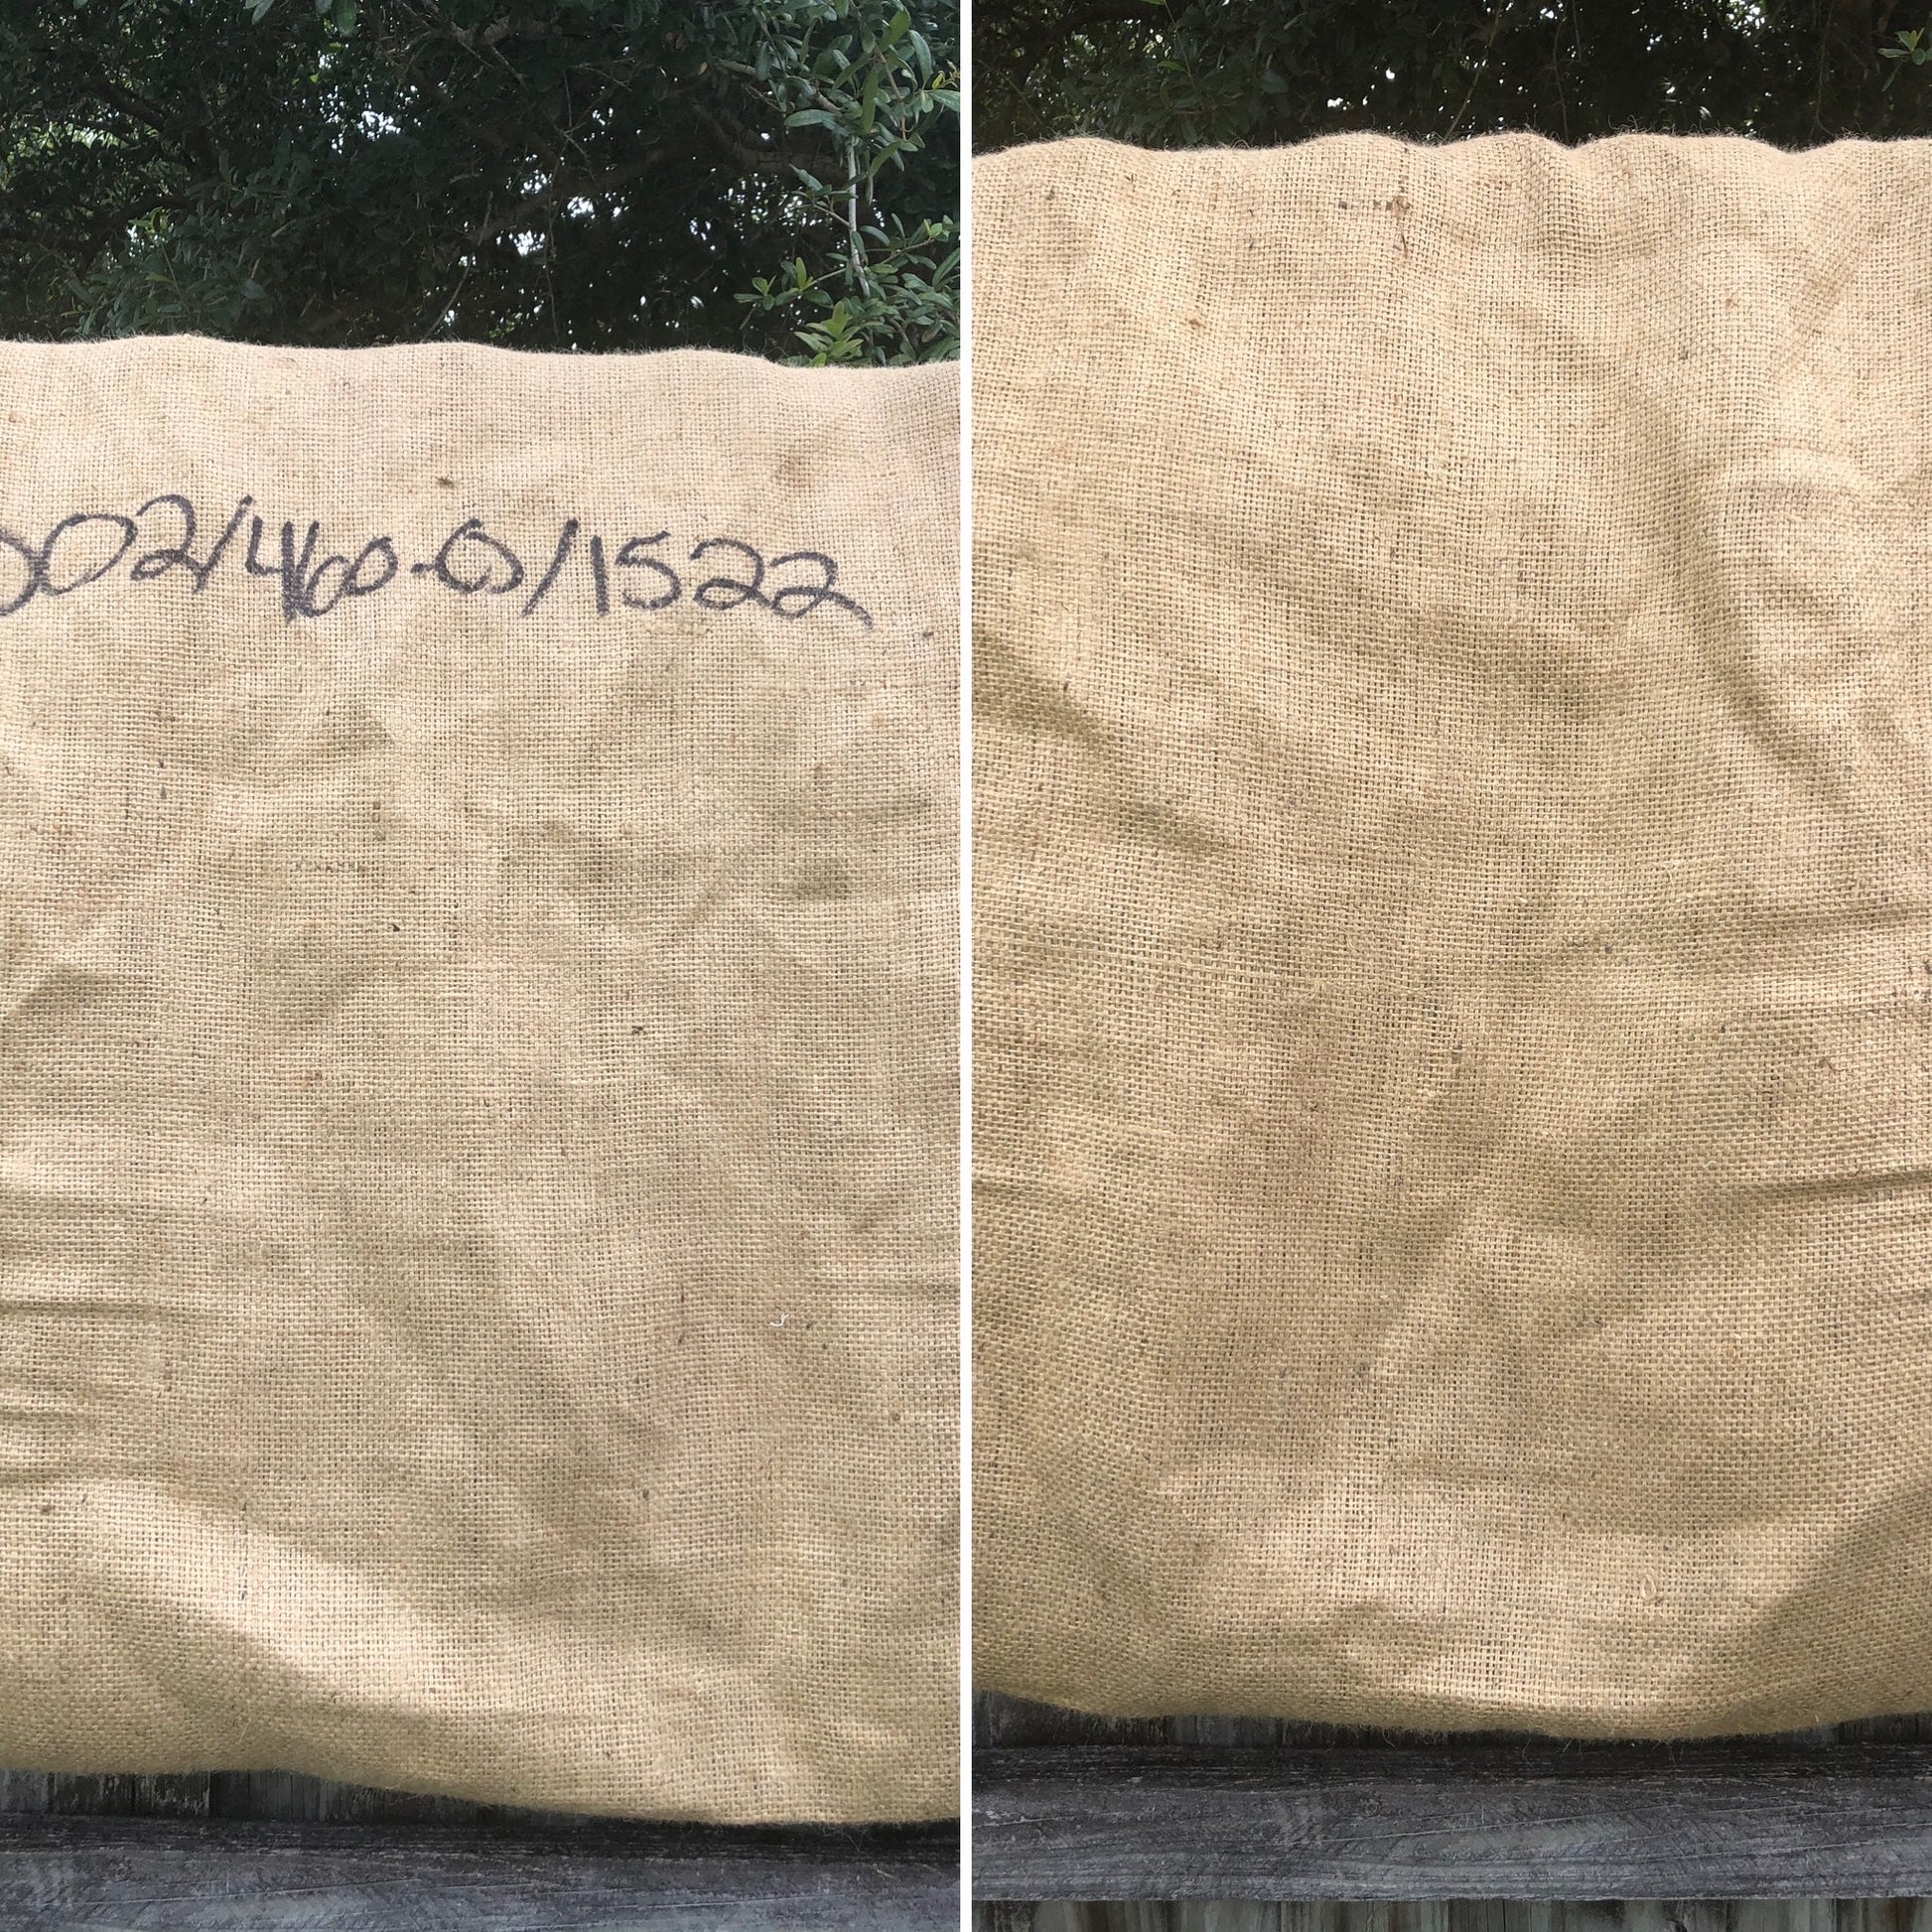 Burlap Coffee Bag | Burlap Coffee Sacks | Hao Bao Bao Coffee